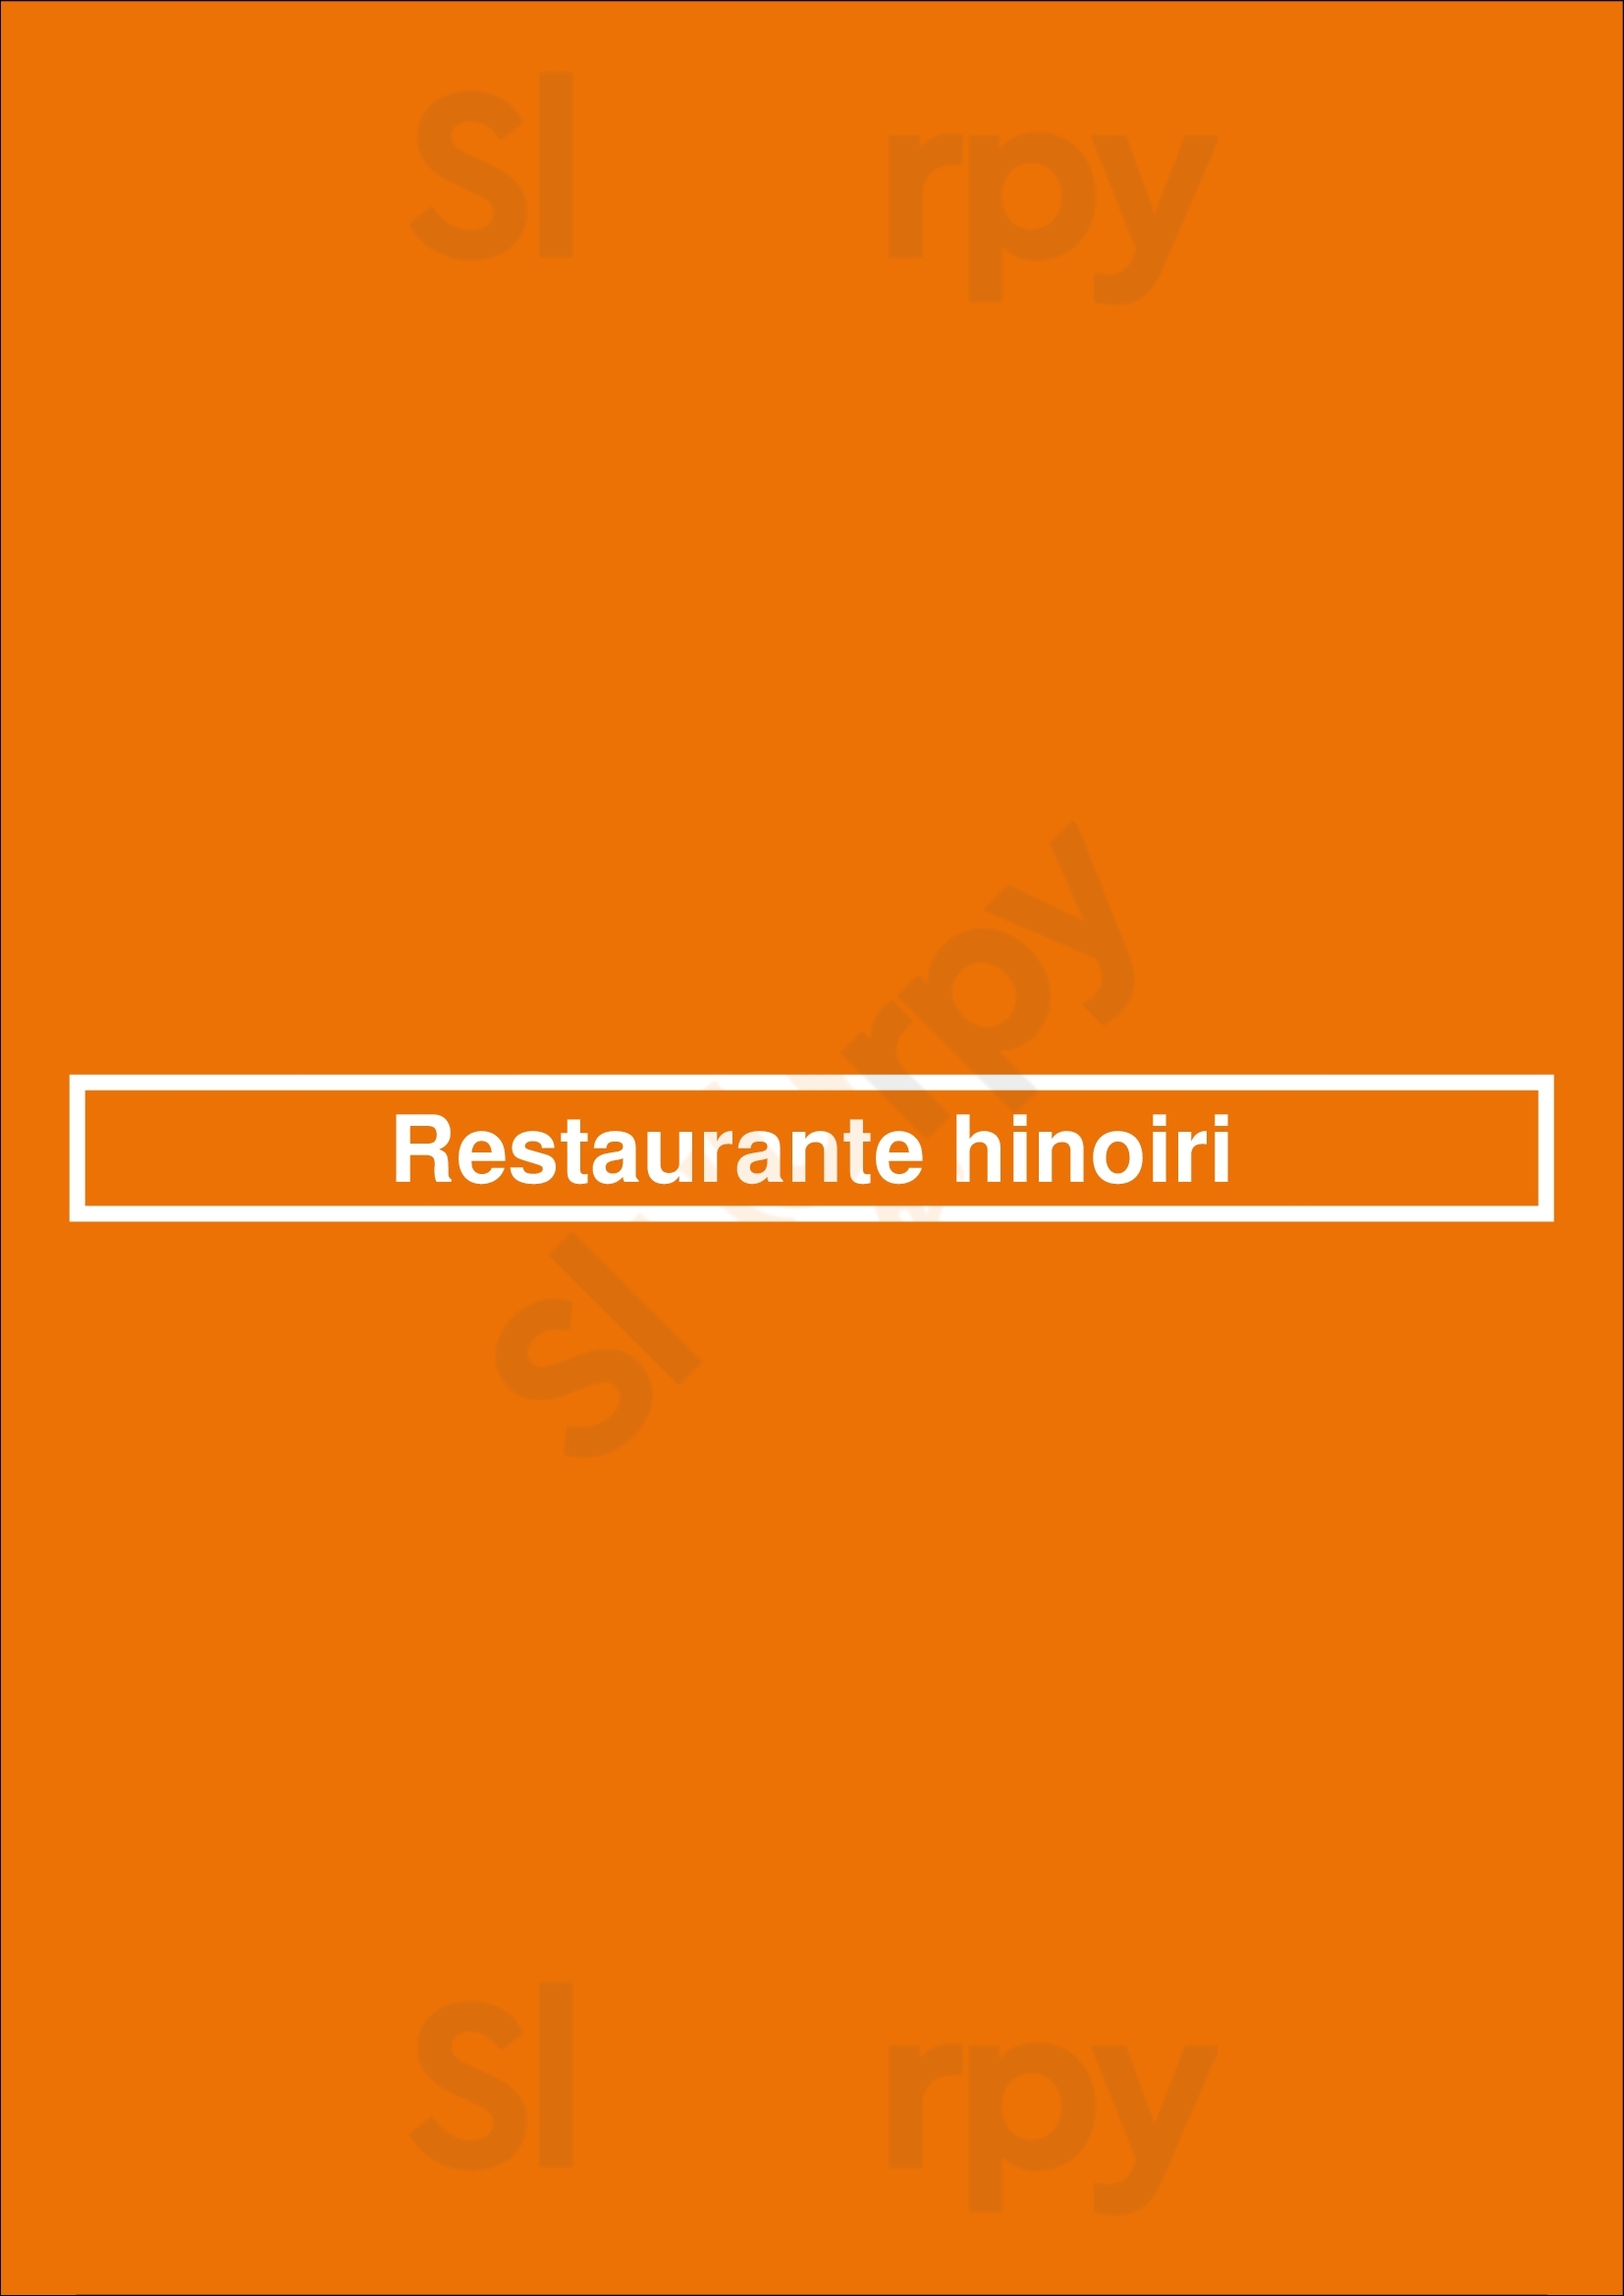 Restaurante Hinoiri Madrid Menu - 1